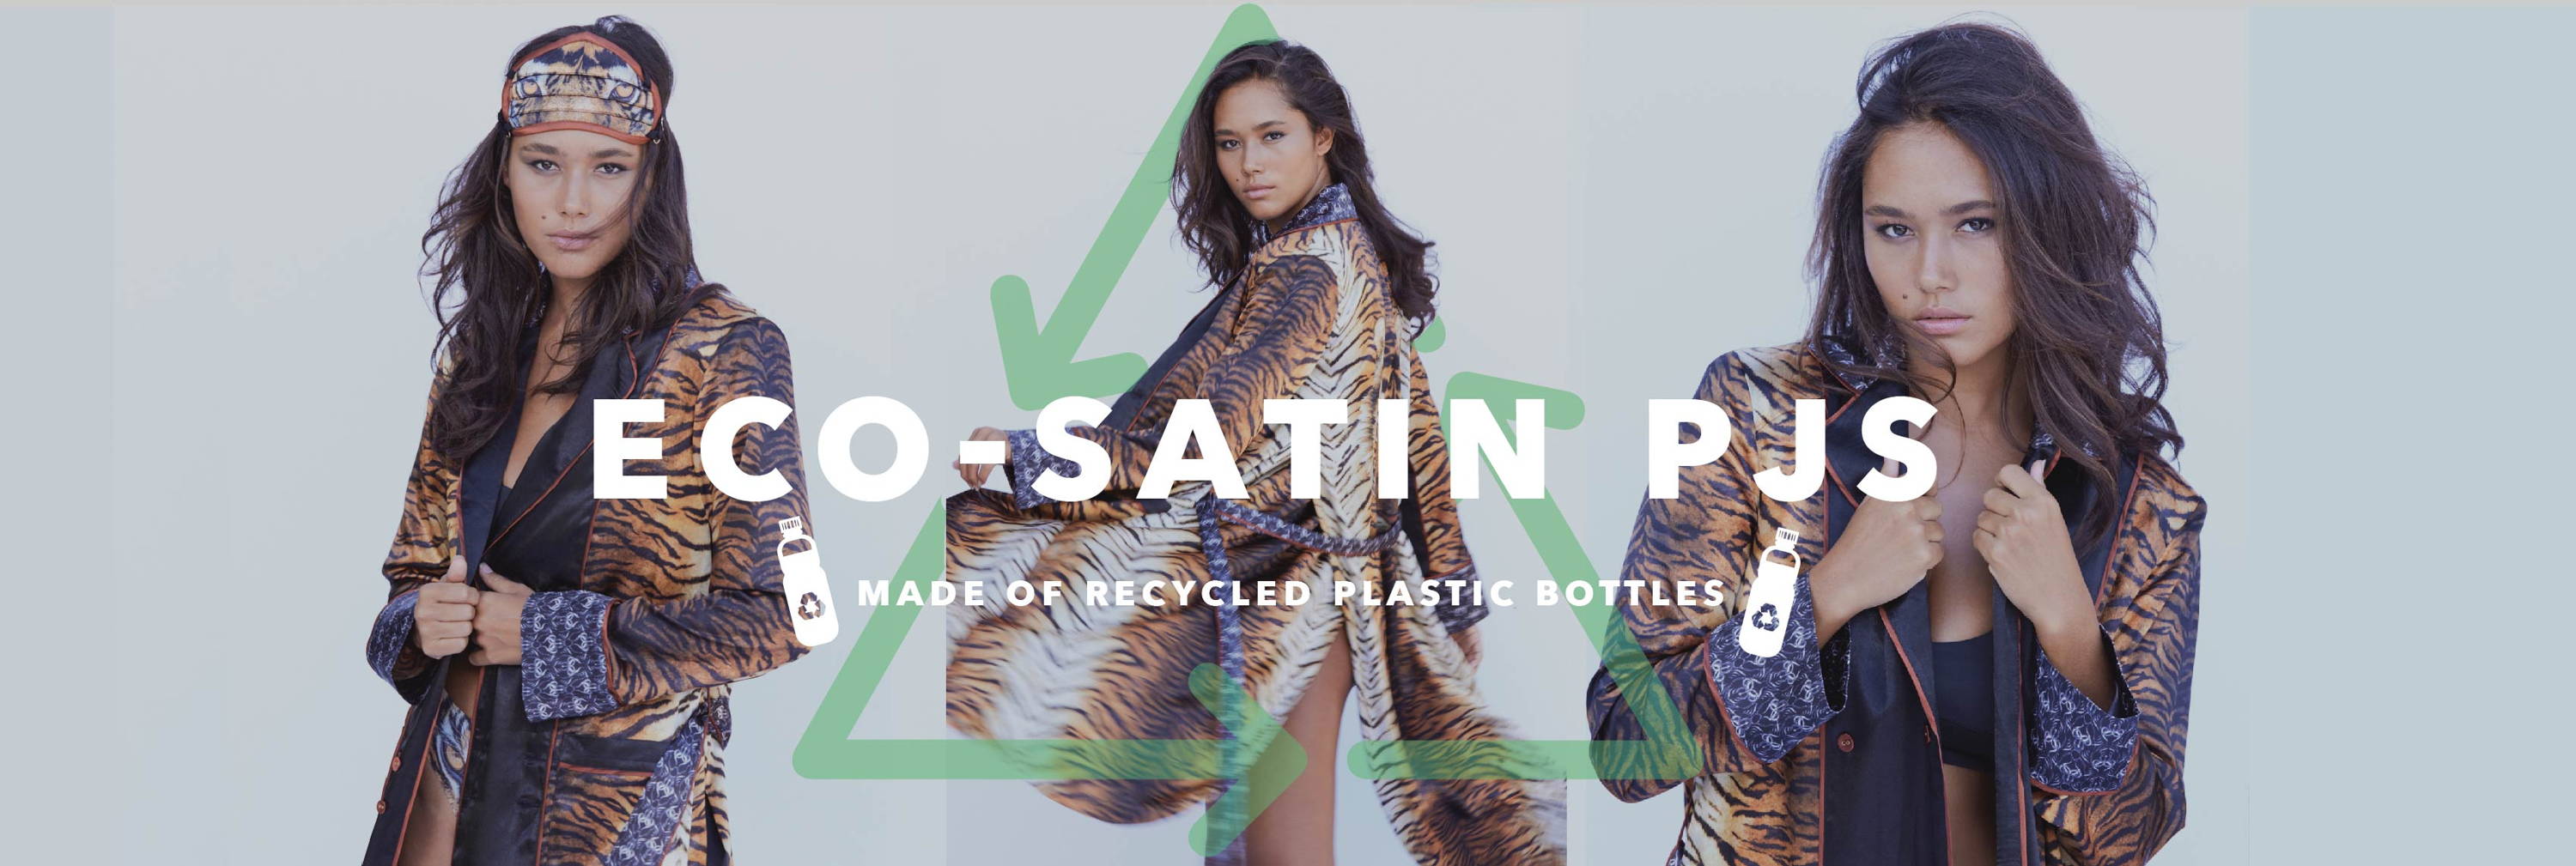 eco satin pjs made of recycled plastic bottles tiger print pajamas sustainable pajamas eco-friendly